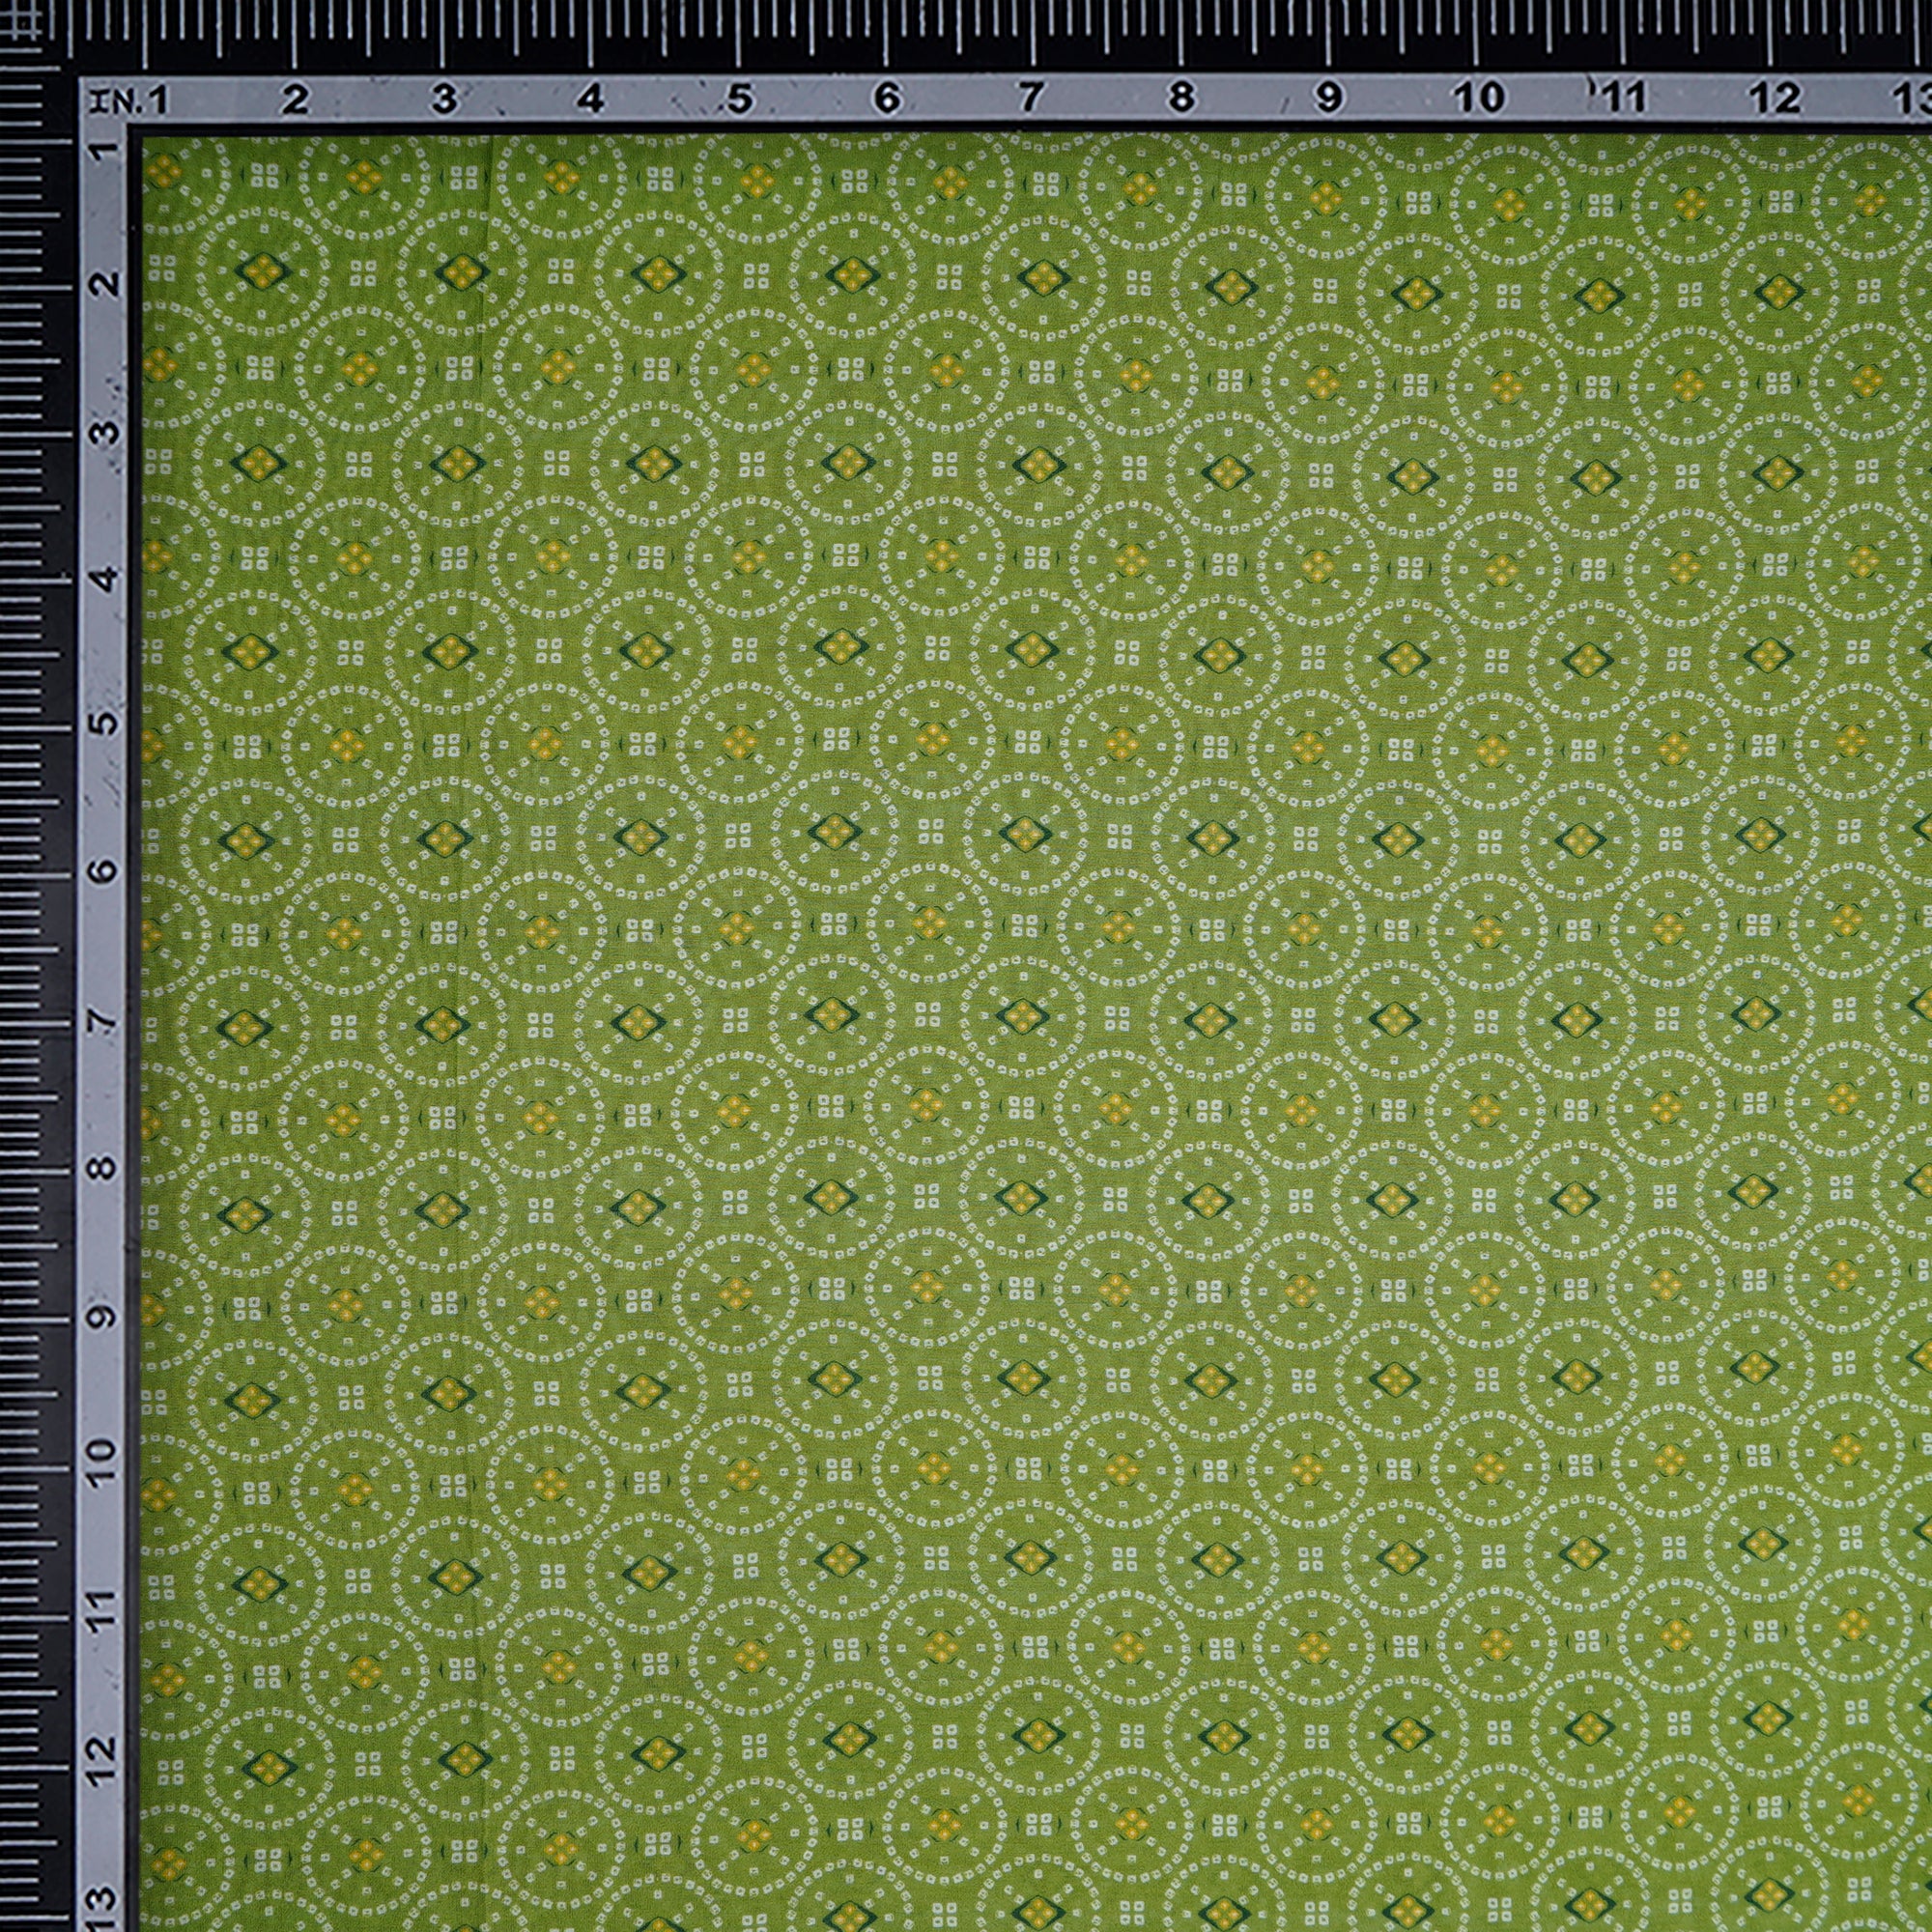 Green Color Digital Printed Pure Chanderi Fabric